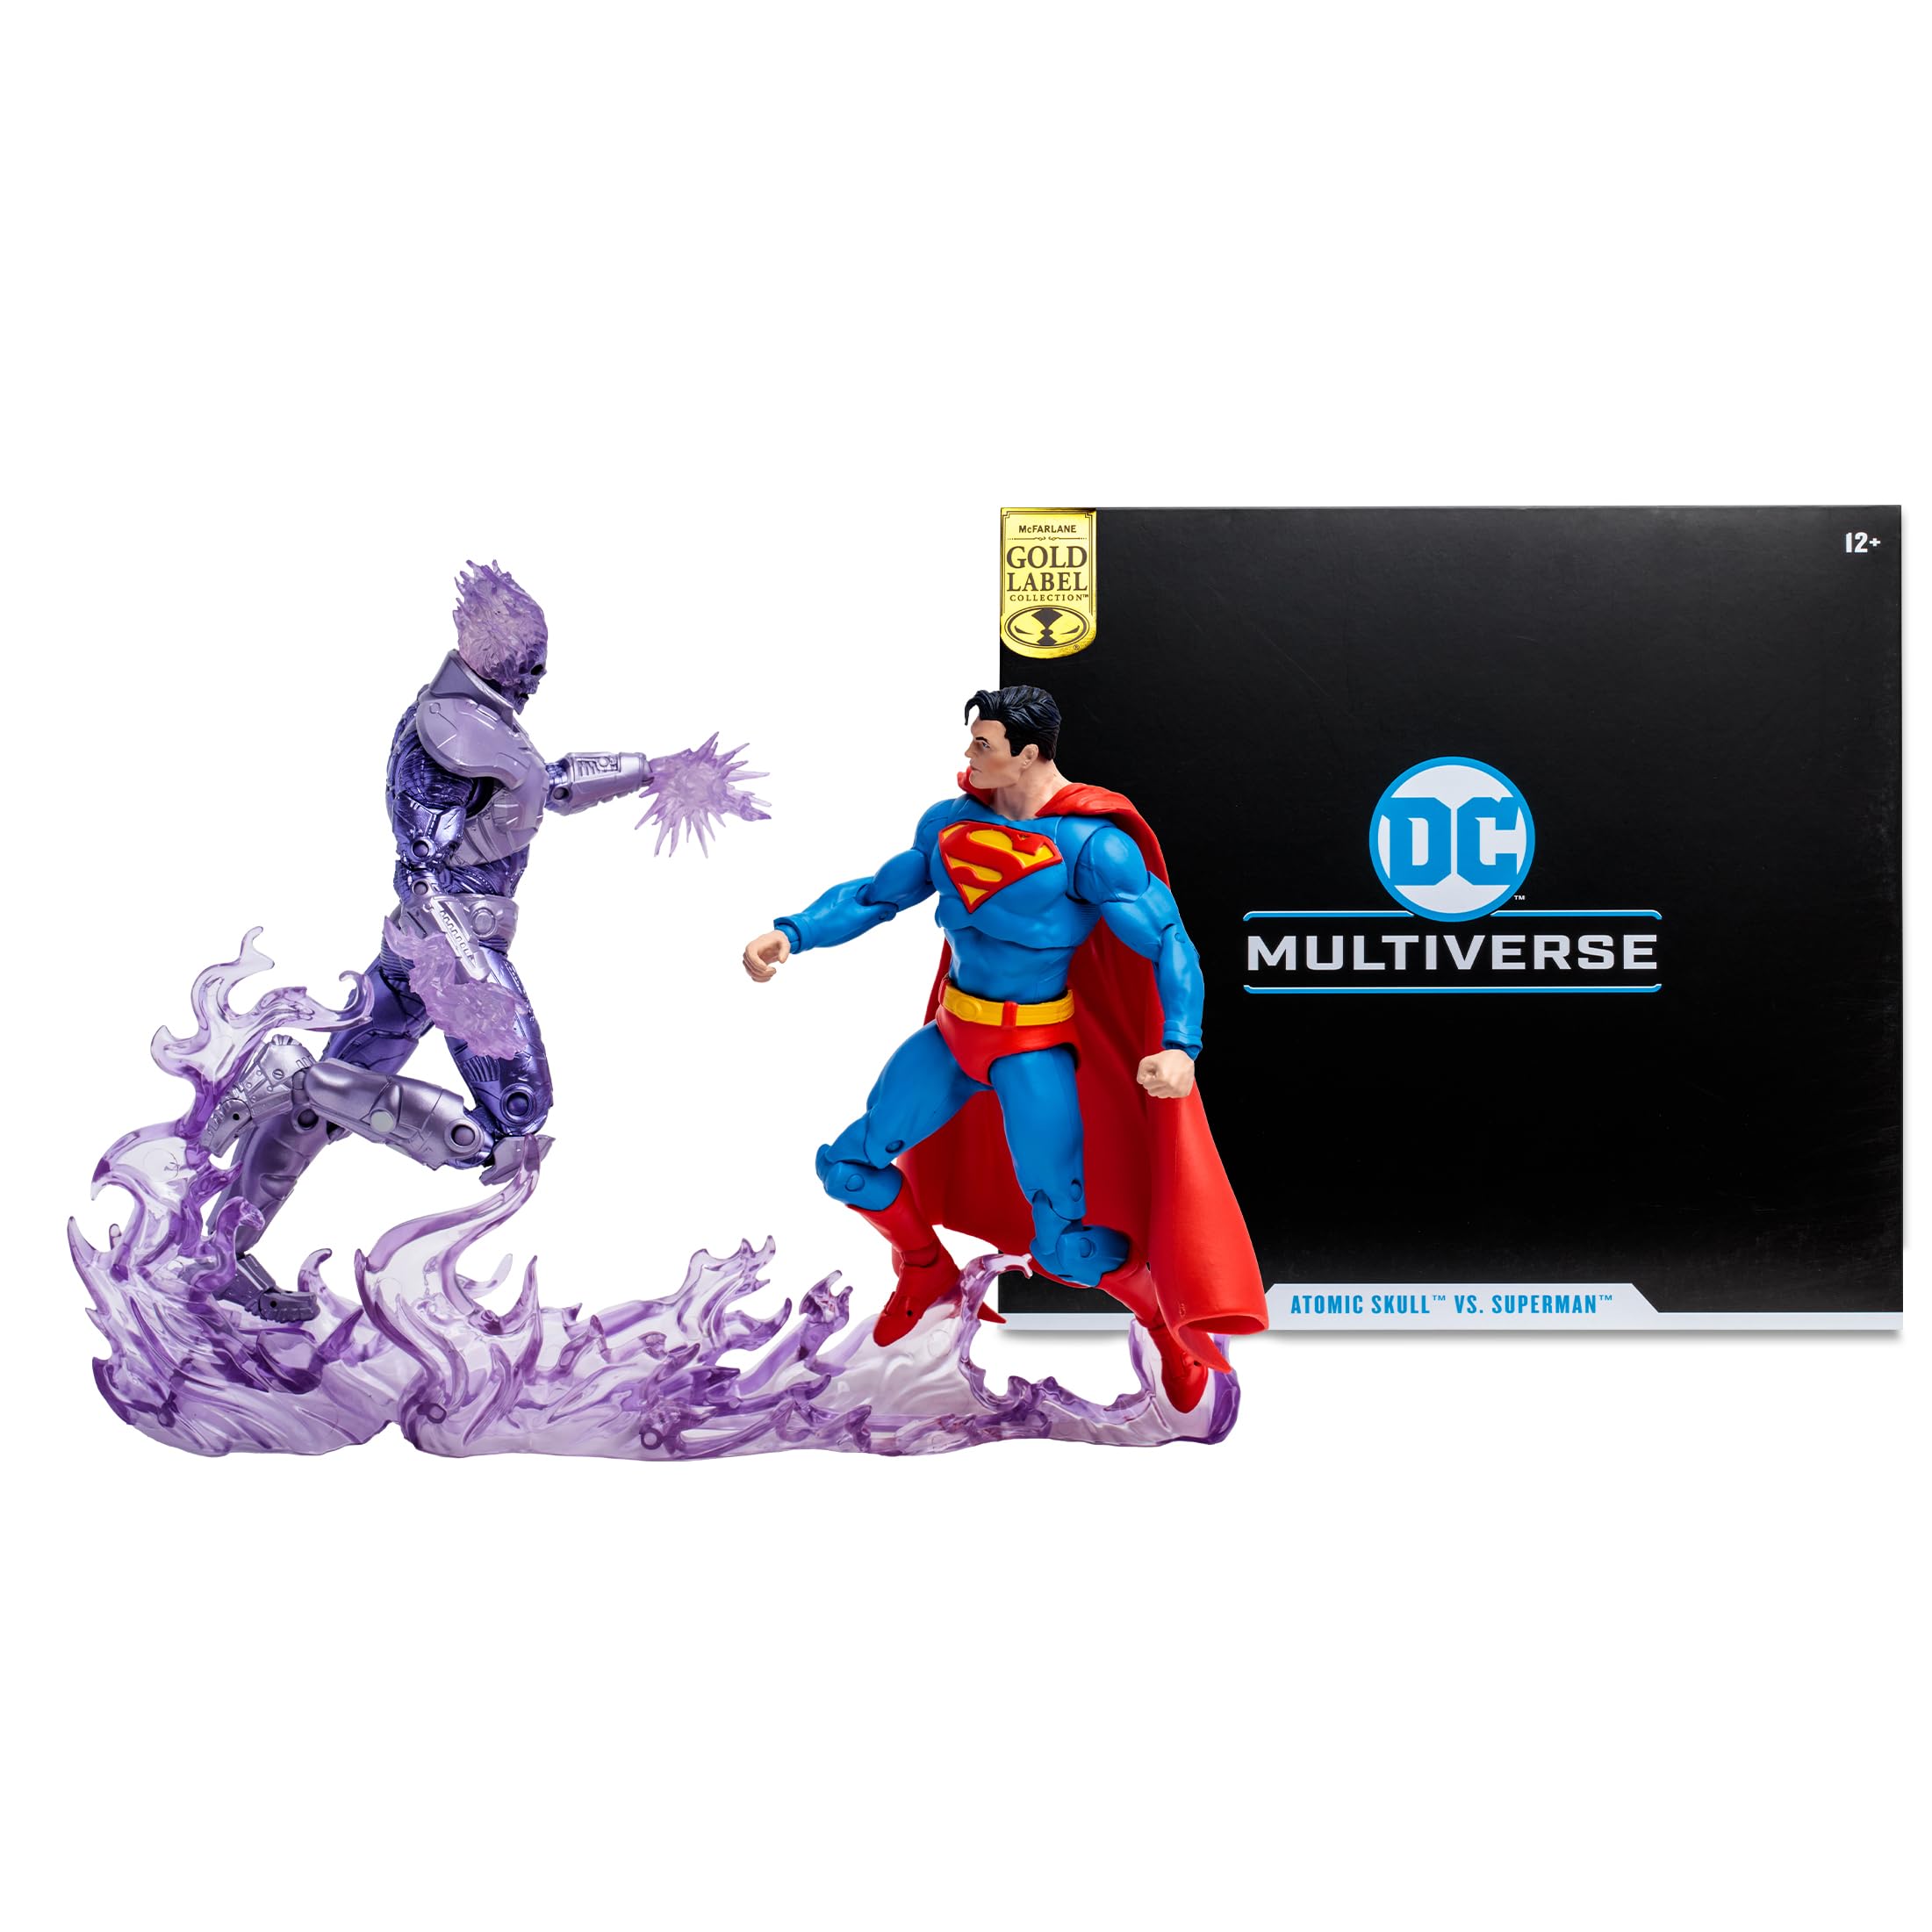 McFarlane Toys - DC Multiverse Atomic Skull vs. Superman 2pk, Gold Label, Amazon Exclusive